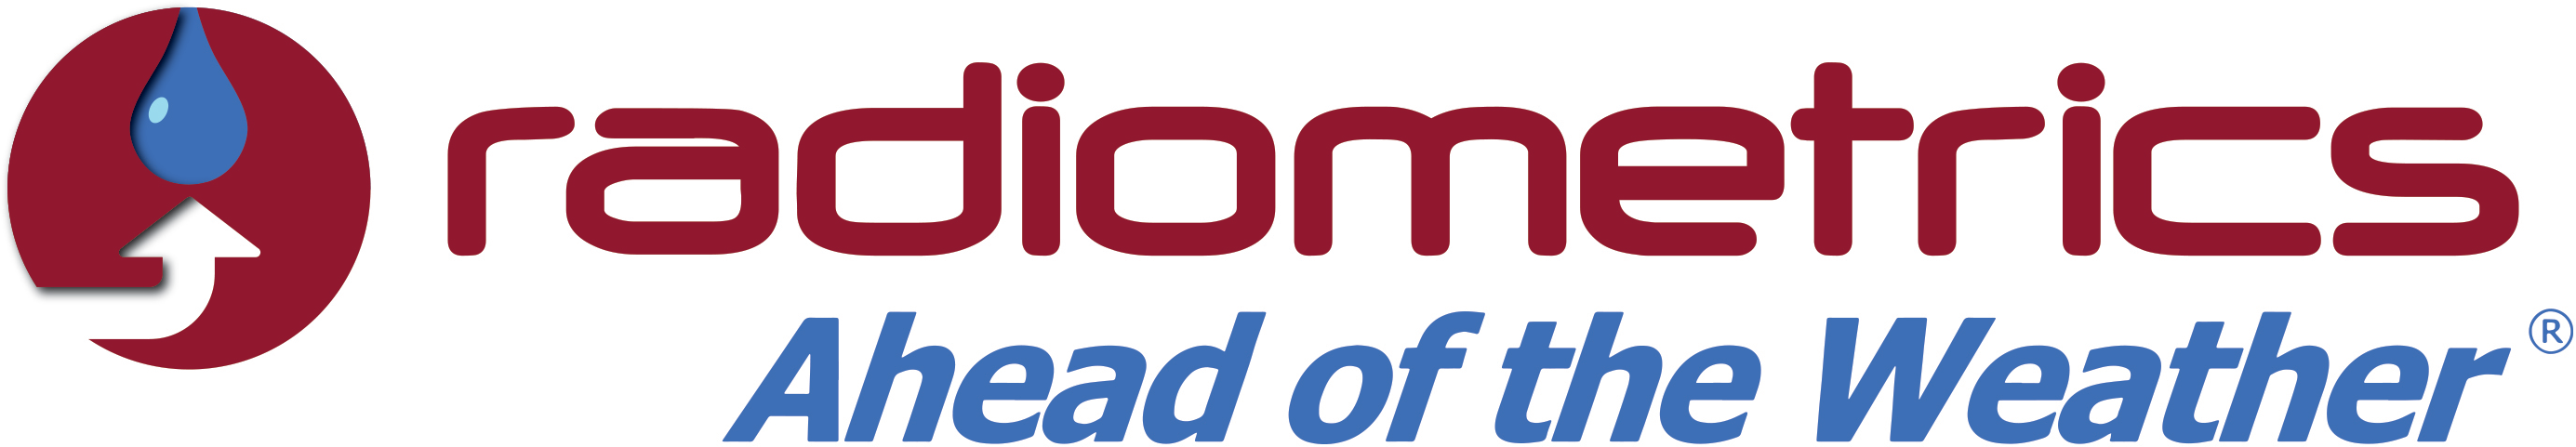 Radiometrics logo